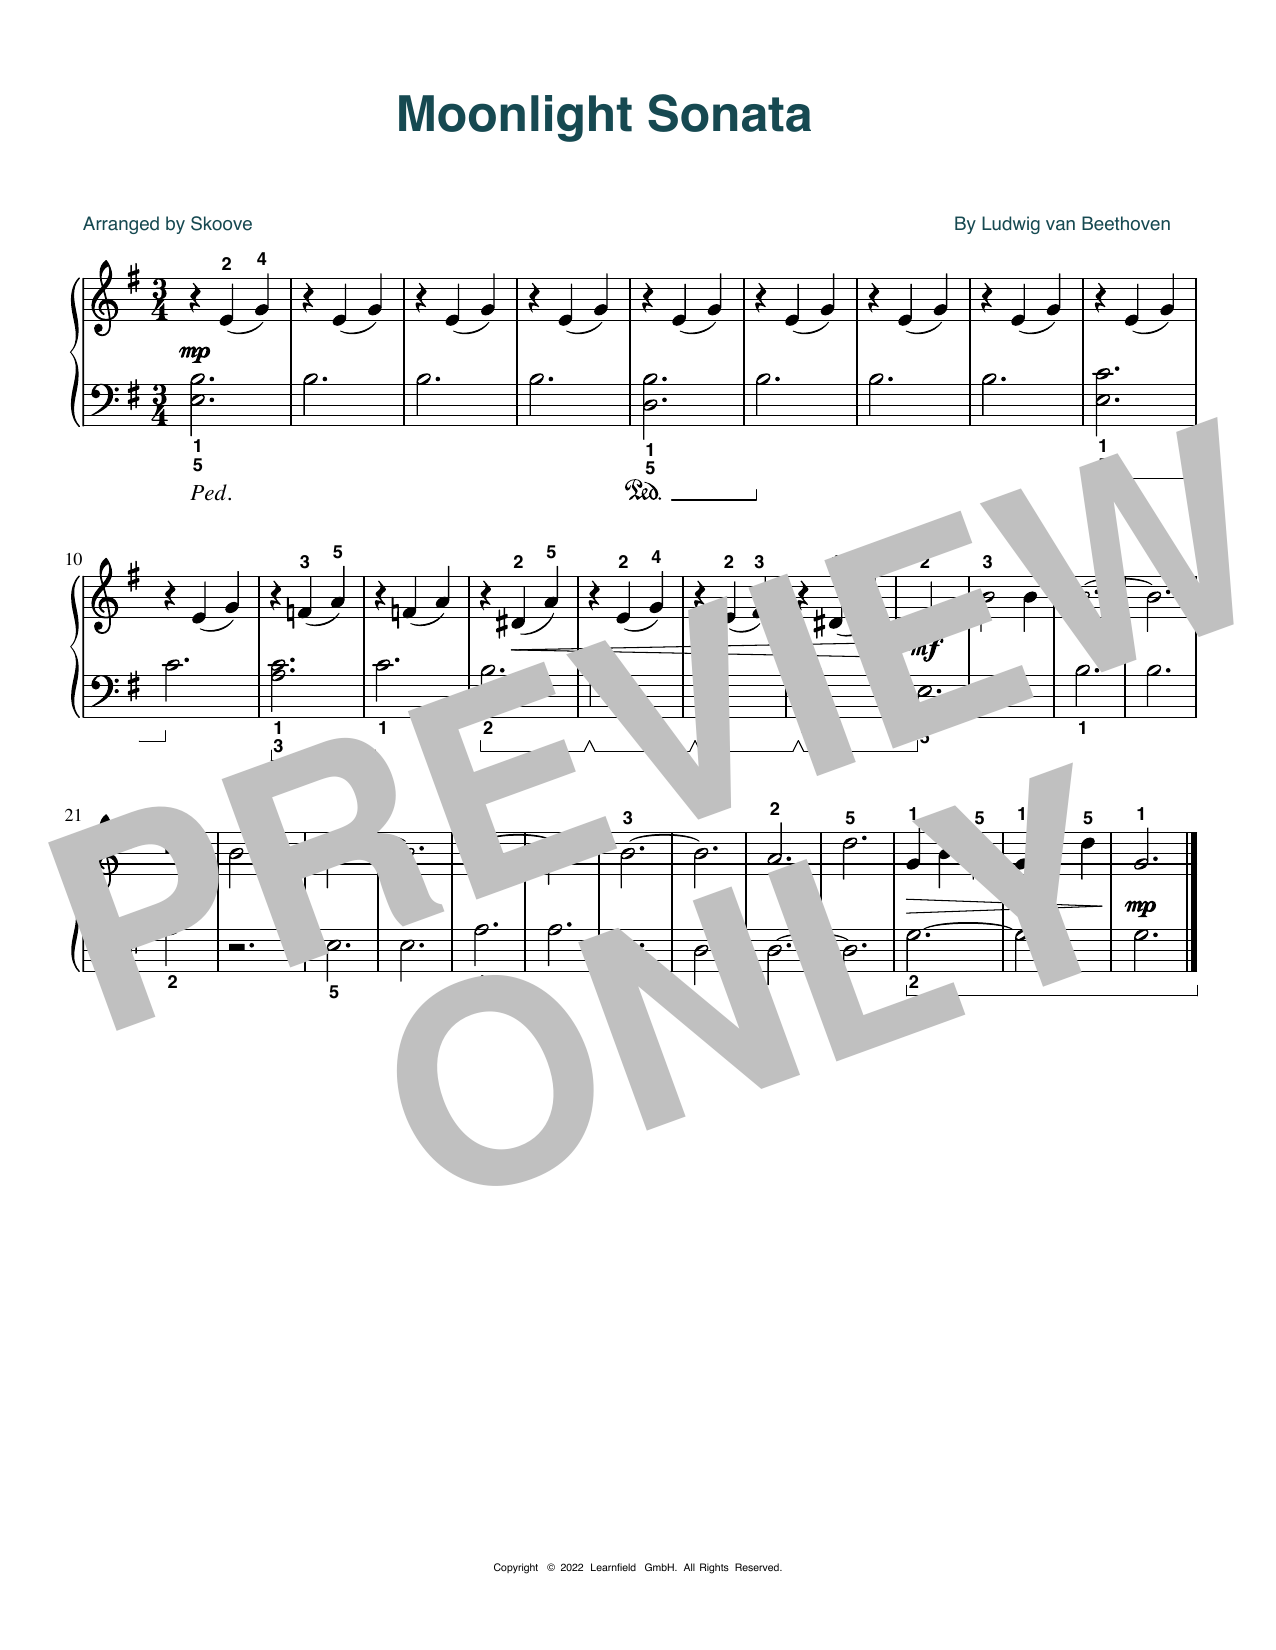 Ludwig van Beethoven Moonlight Sonata (arr. Skoove) Sheet Music Notes & Chords for Beginner Piano (Abridged) - Download or Print PDF